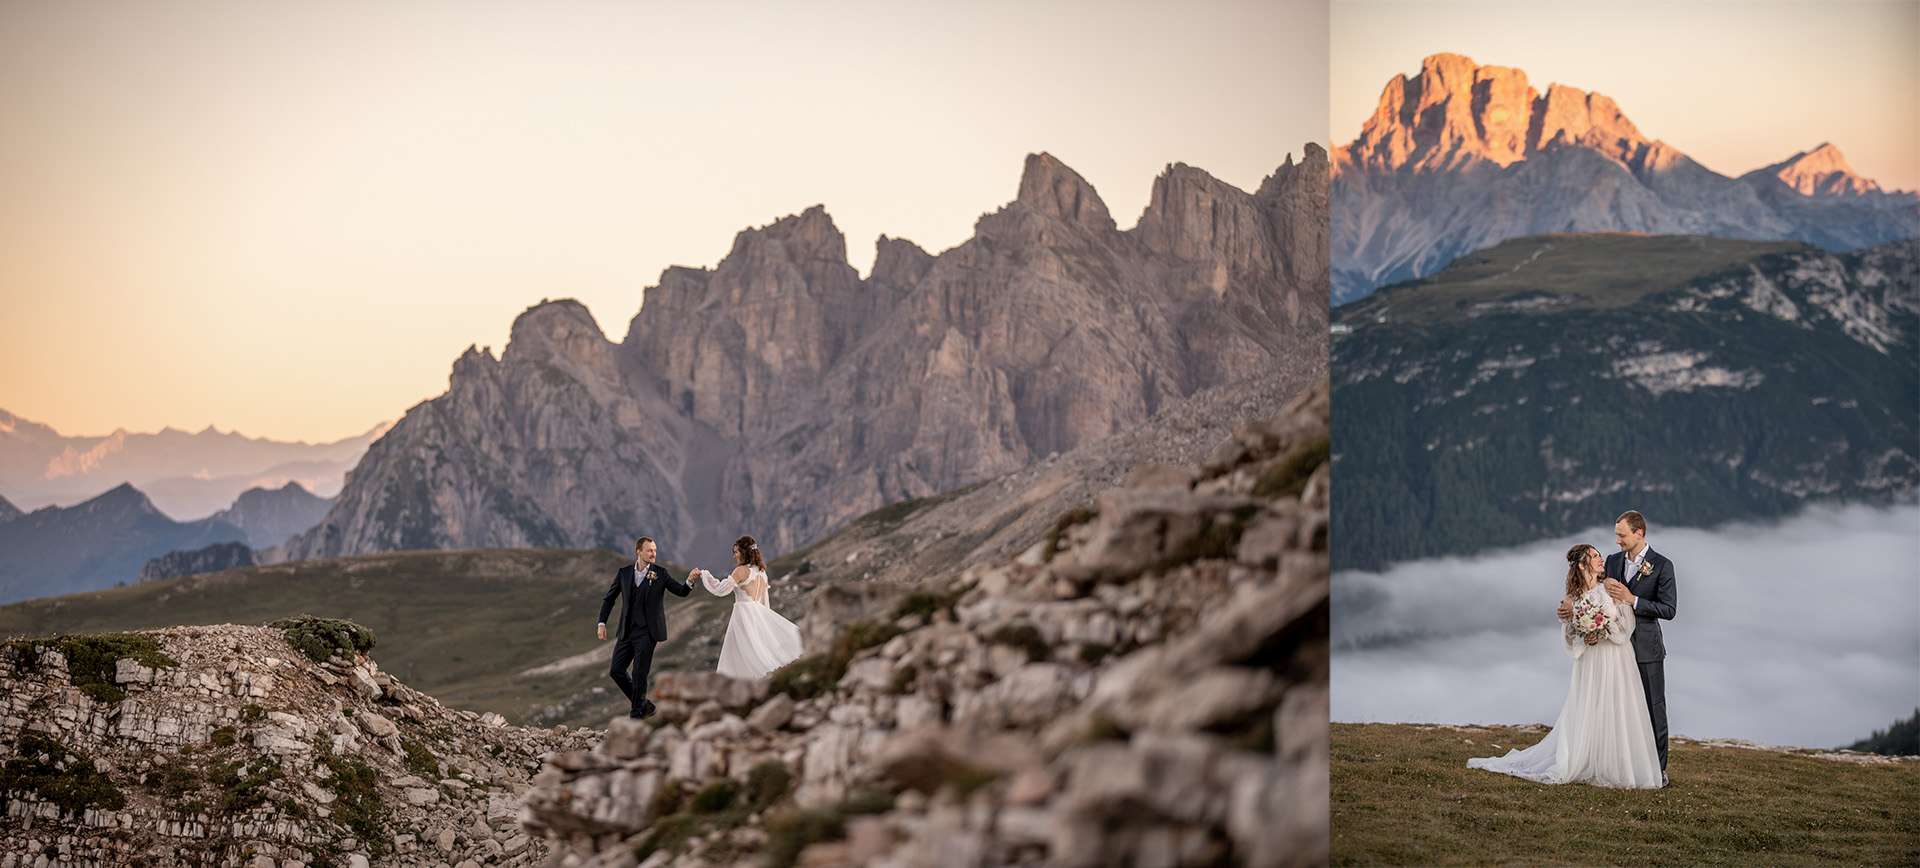 dolomites elopement - mountain wedding in italy